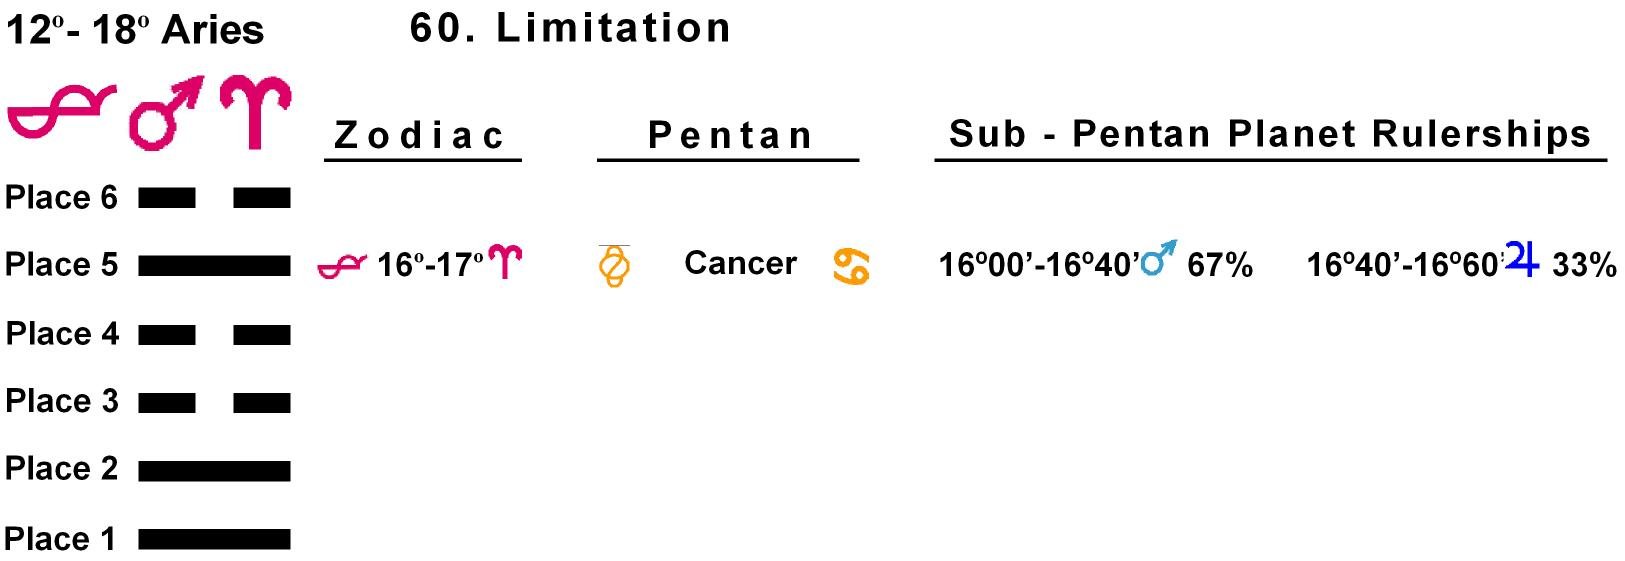 Pent-lines-01AR 16-17 Hx-60 Limitation